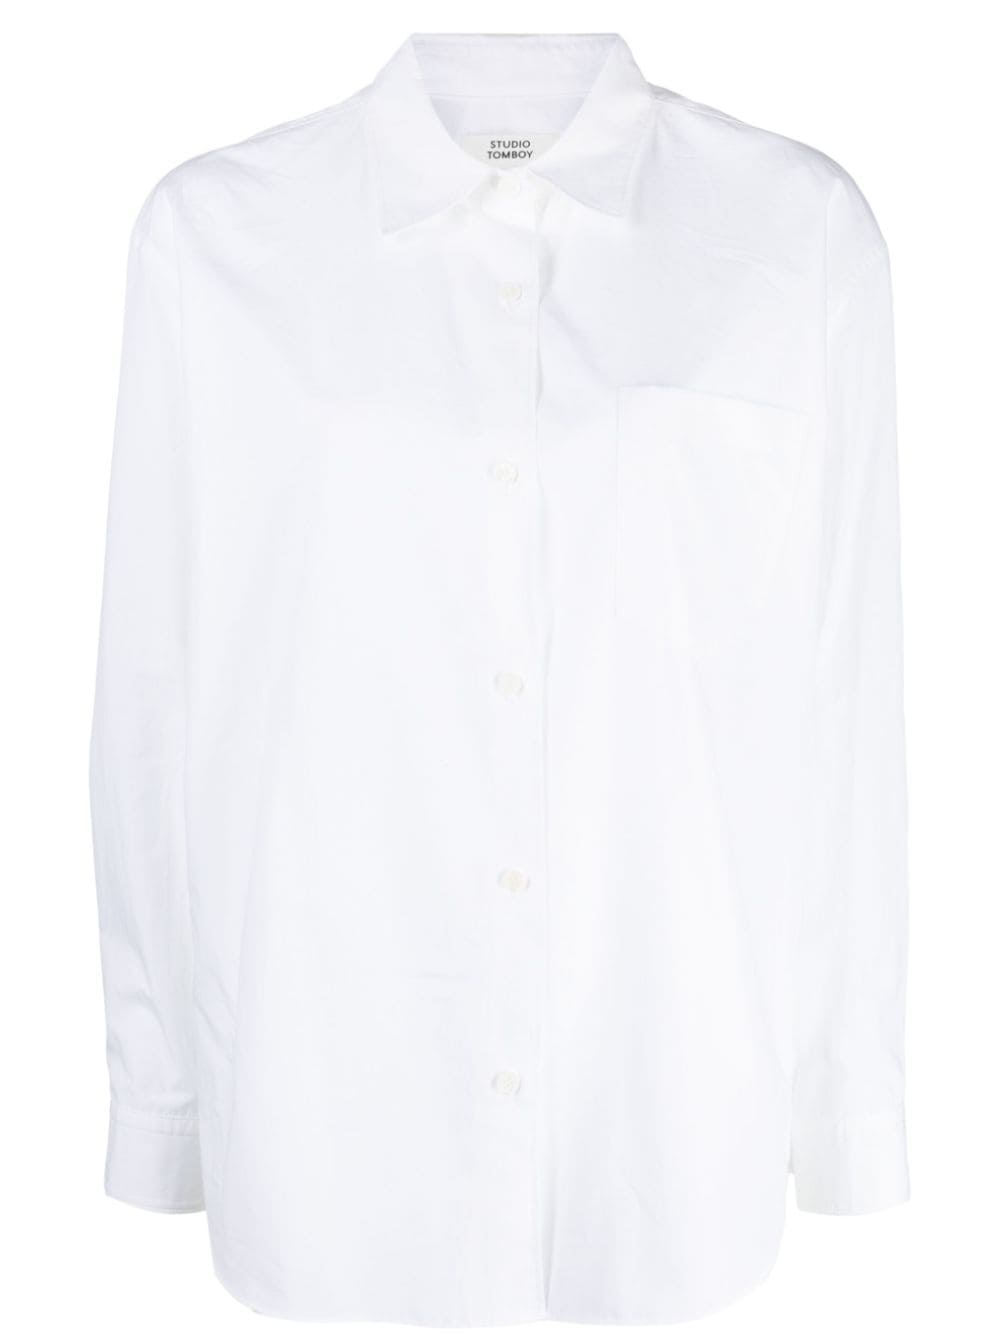 STUDIO TOMBOY long-sleeve cotton shirt - White von STUDIO TOMBOY